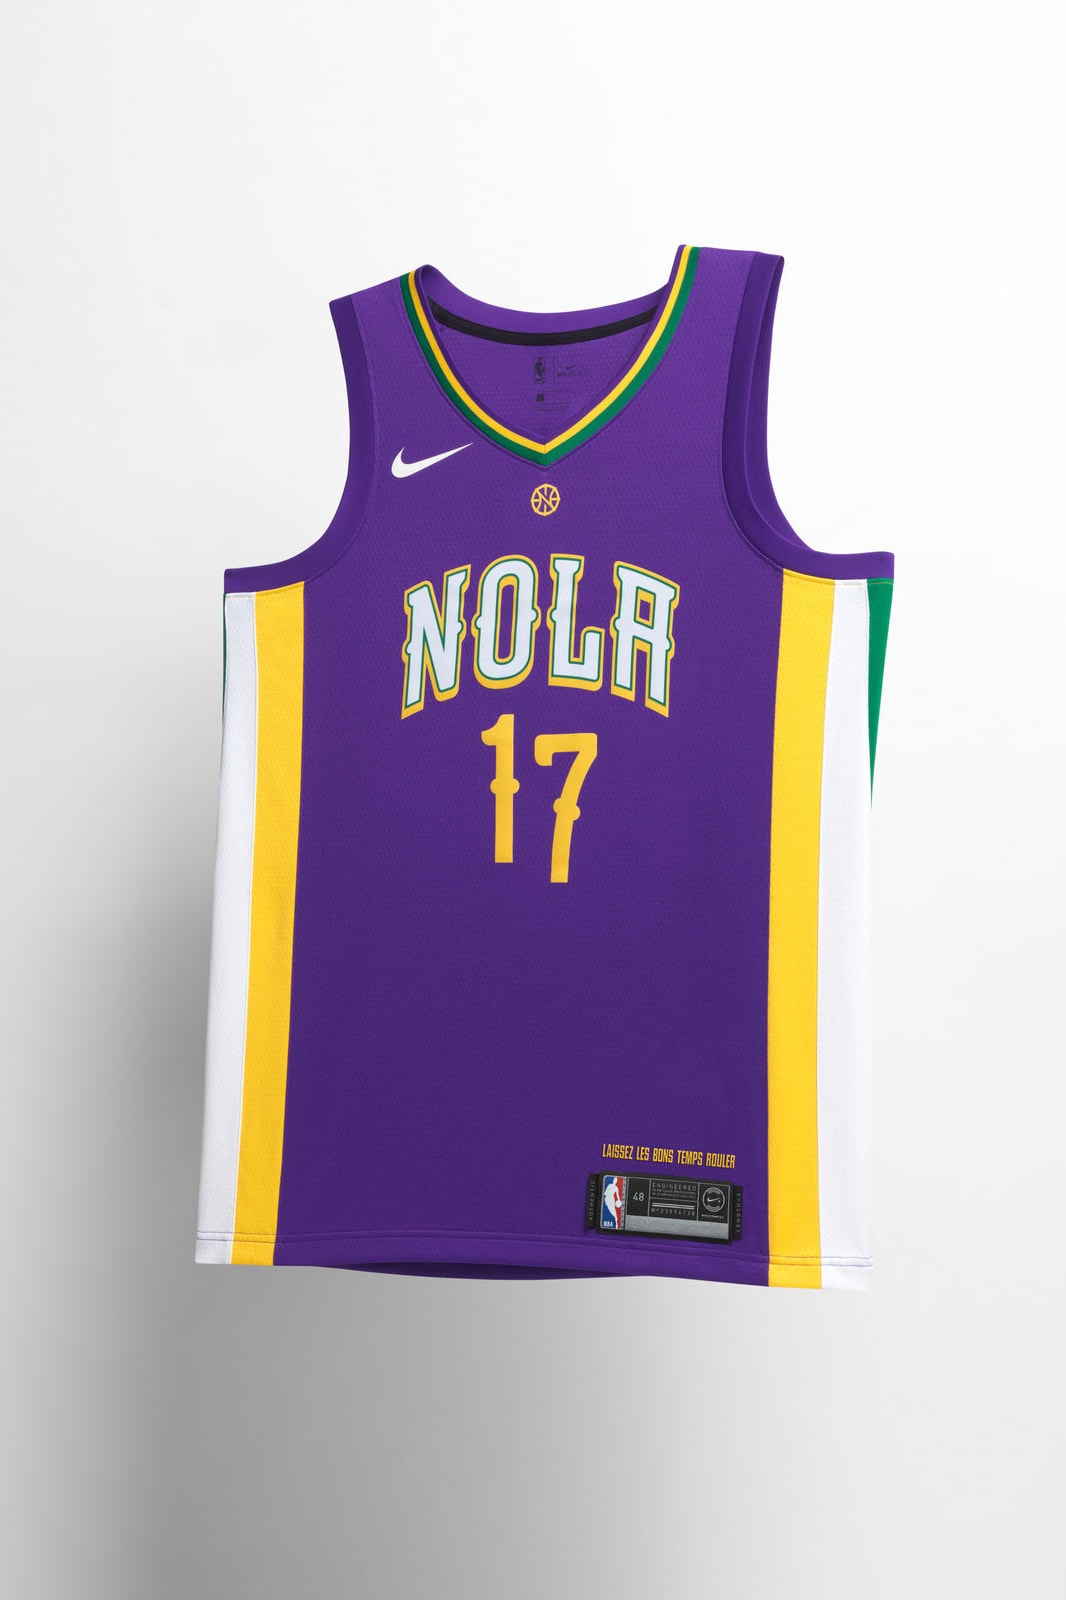 adidas Unveils New Short-Sleeve NCAA Basketball Uniforms